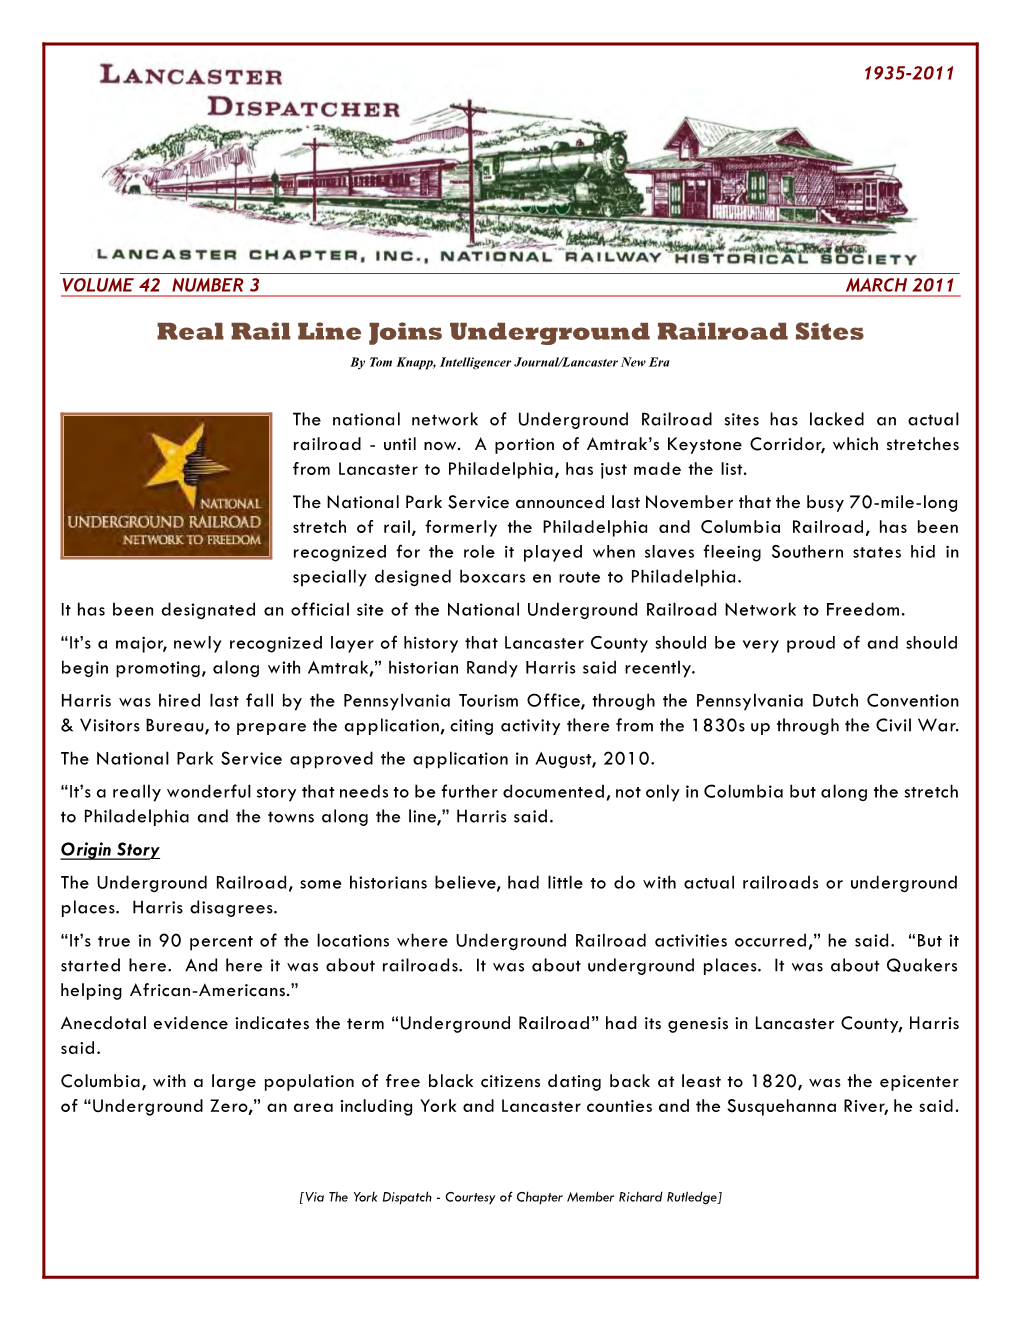 Real Rail Line Joins Underground Railroad Sites by Tom Knapp, Intelligencer Journal/Lancaster New Era